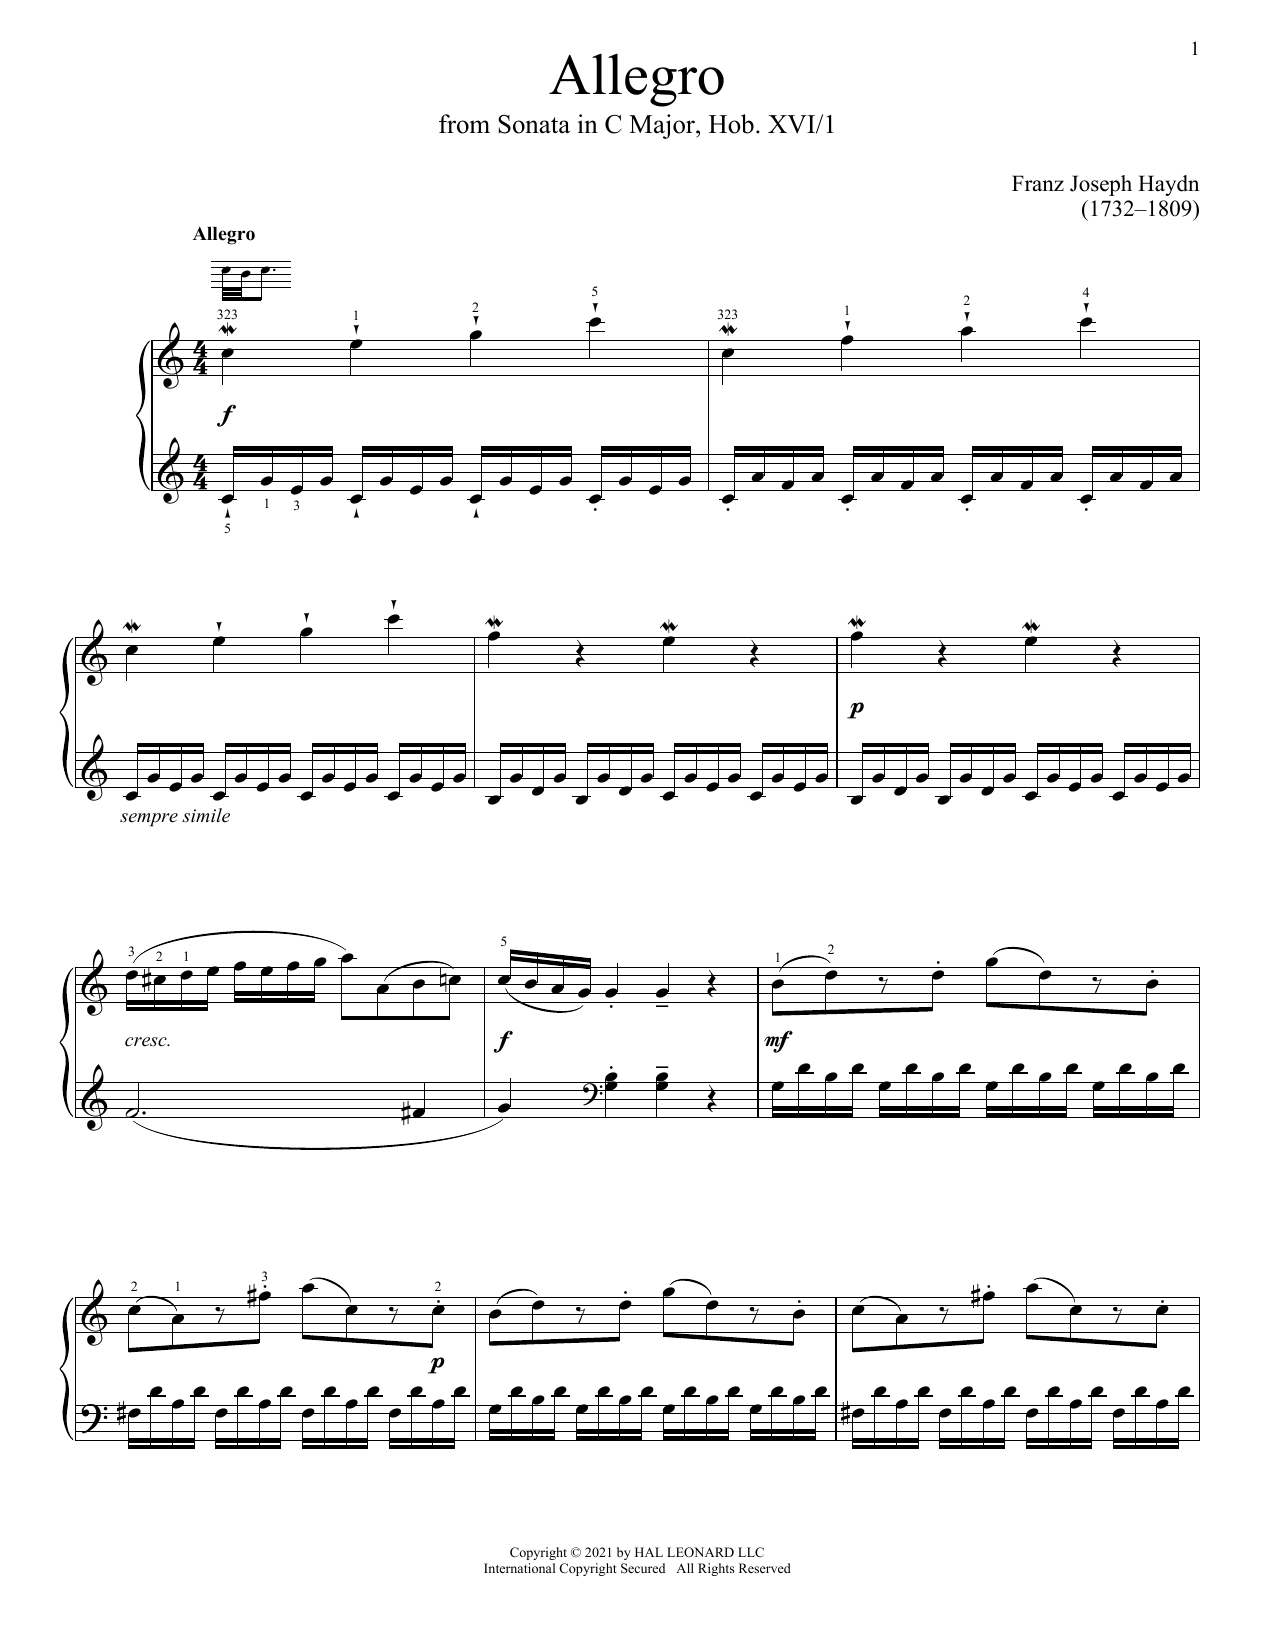 Franz Joseph Haydn Sonata In C Major, Hob. XVI: 1 sheet music notes and chords arranged for Piano Solo